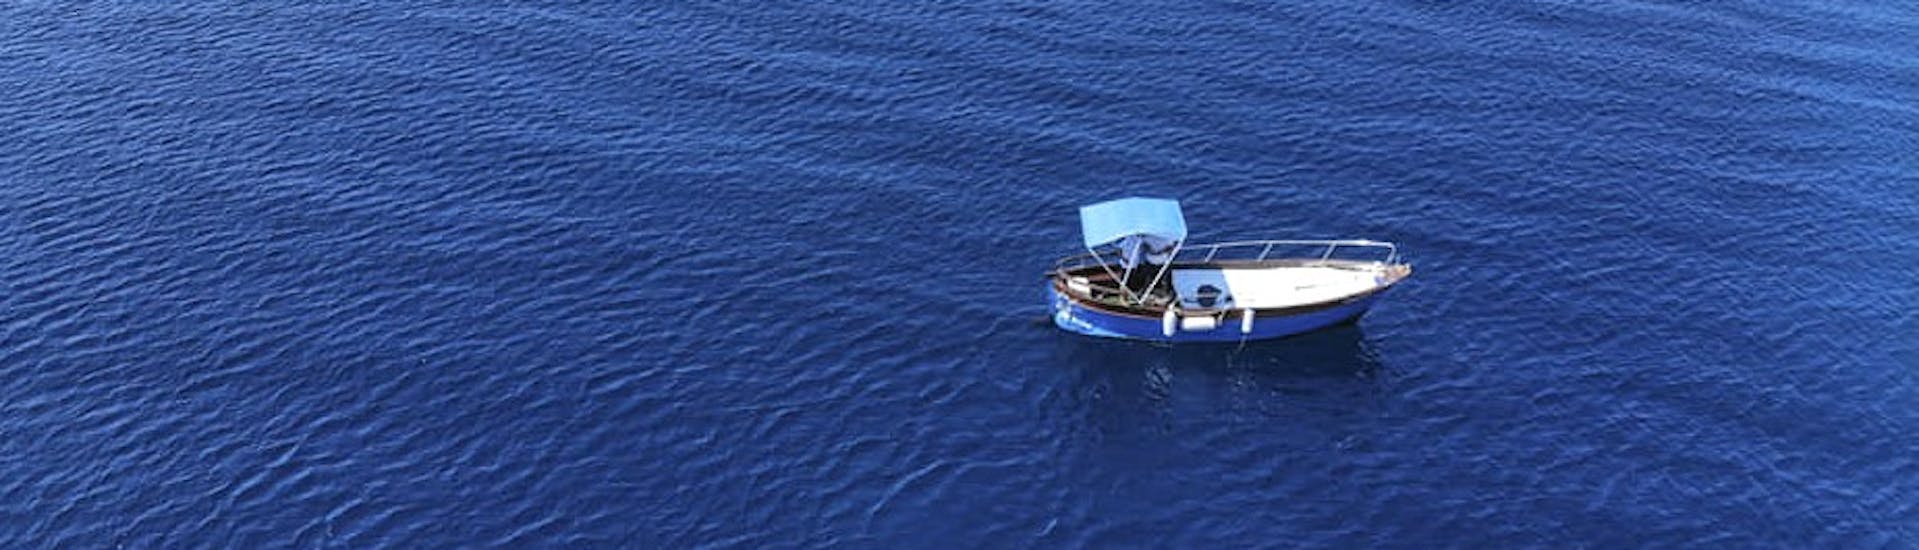 Bootstour von Gallipoli zur Insel Sant'Andrea.